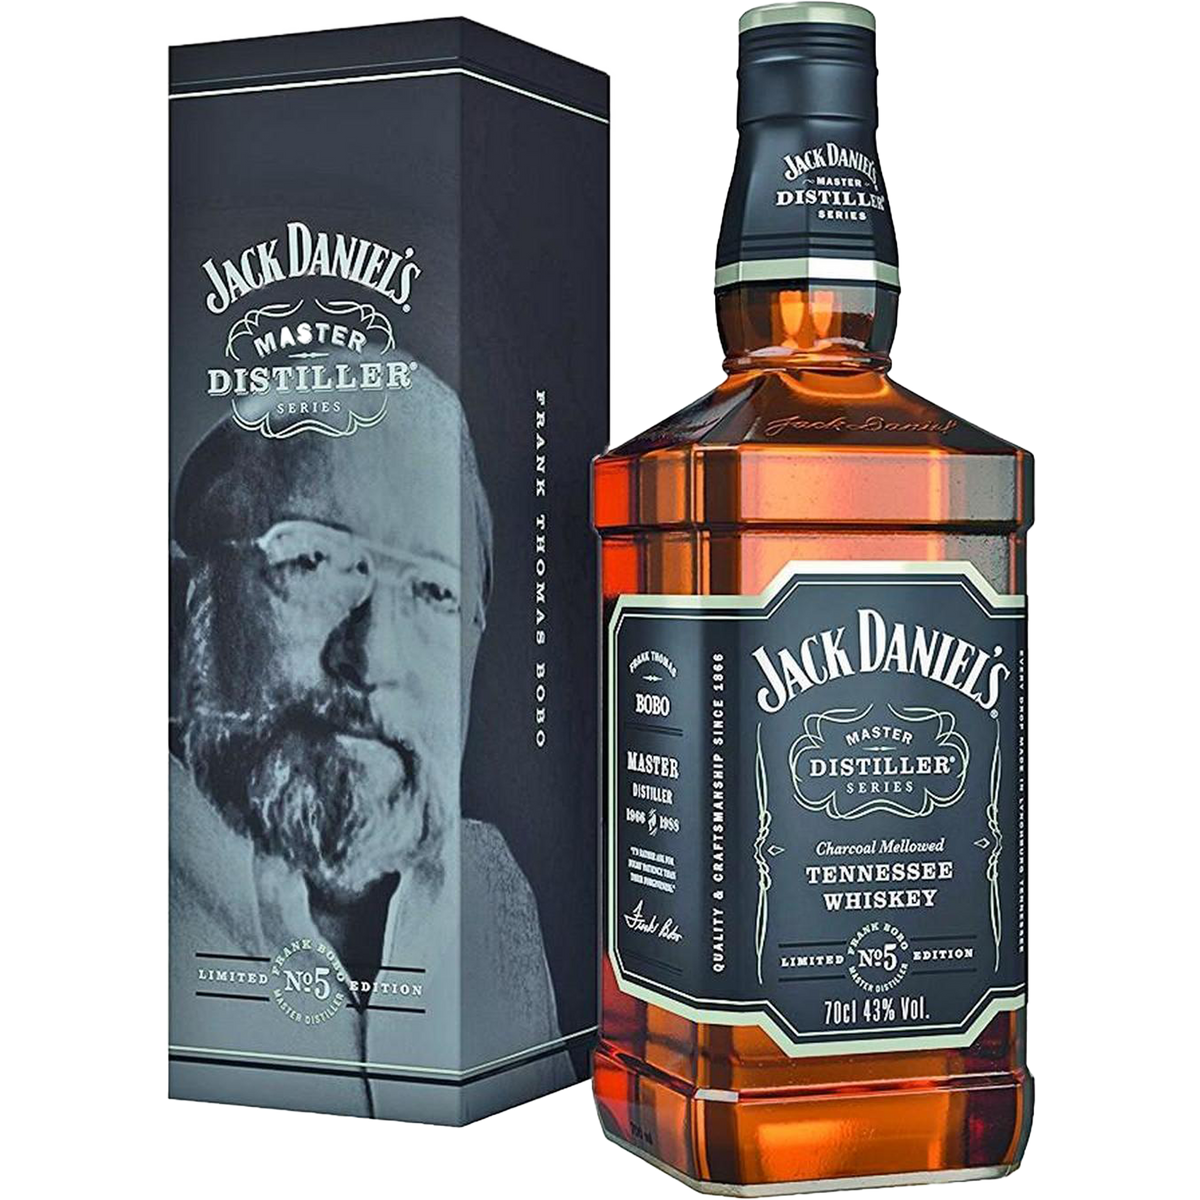 Jack Daniel Master Distiller Limited NO6 Edition